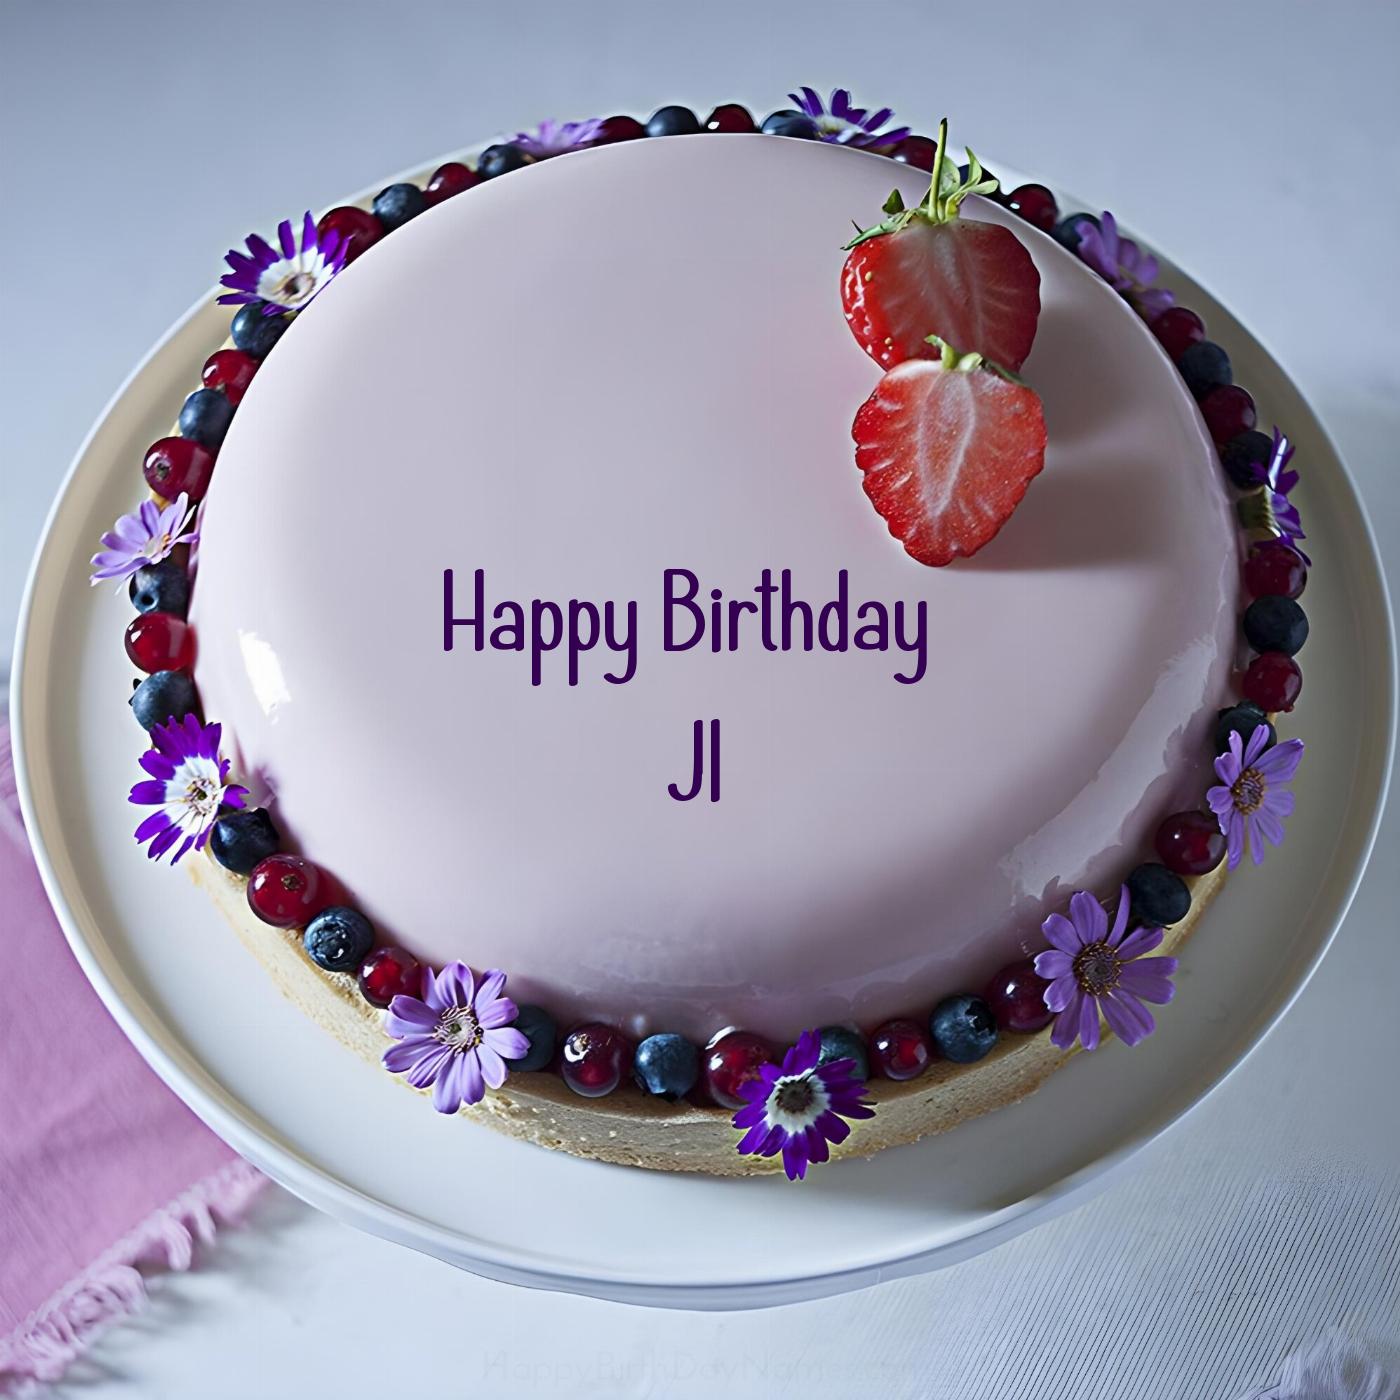 Happy Birthday Jl Strawberry Flowers Cake